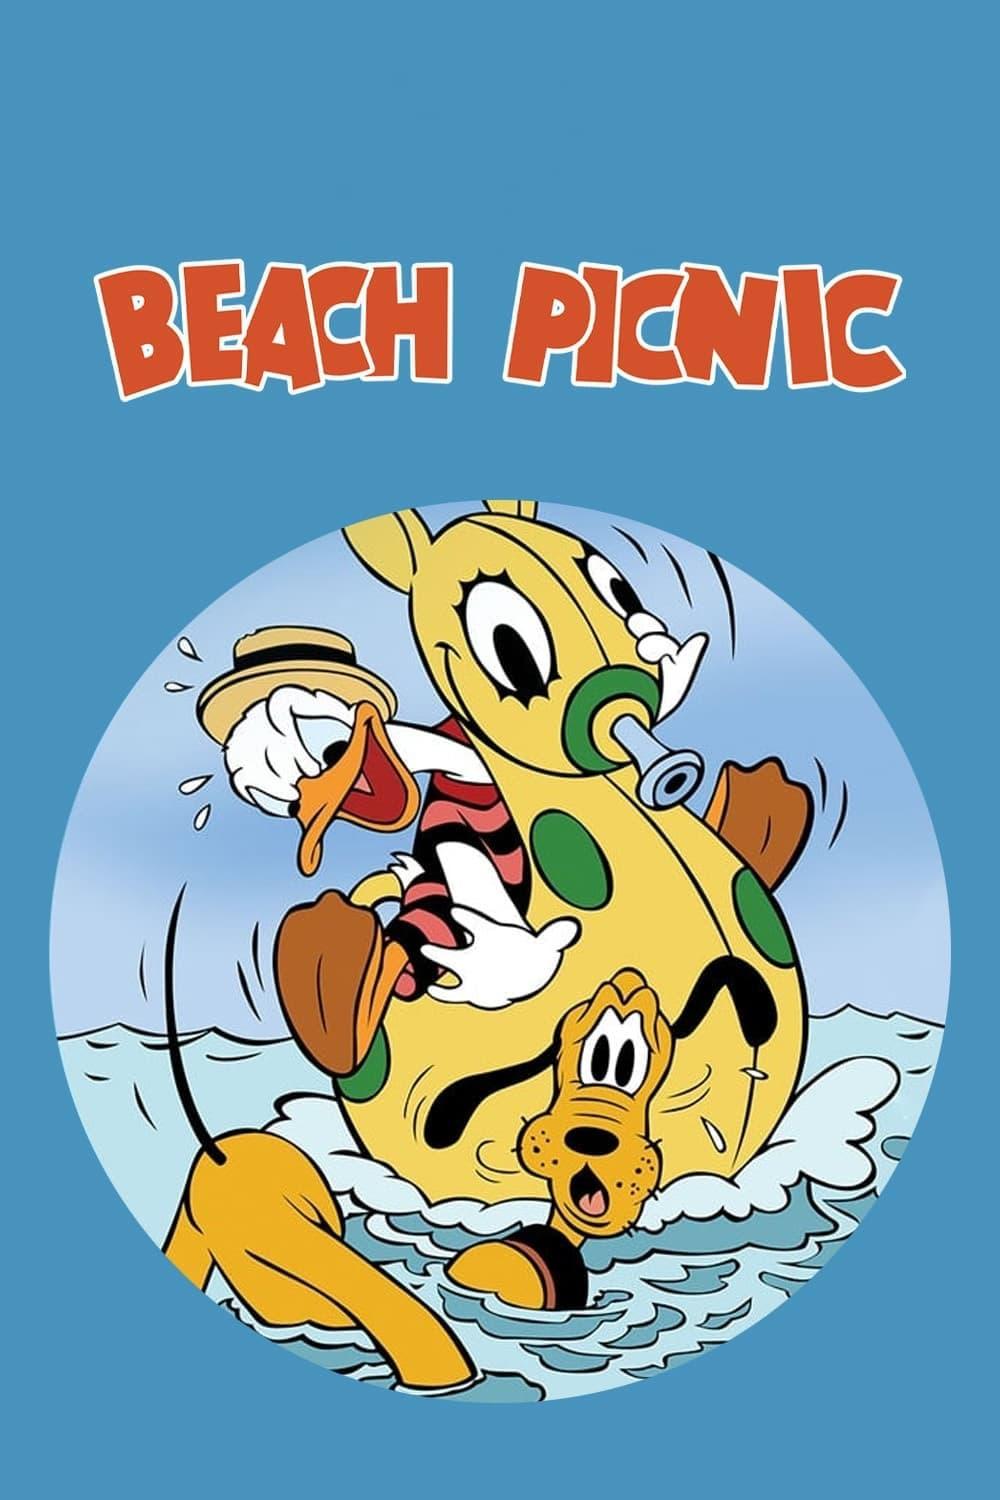 Beach Picnic poster